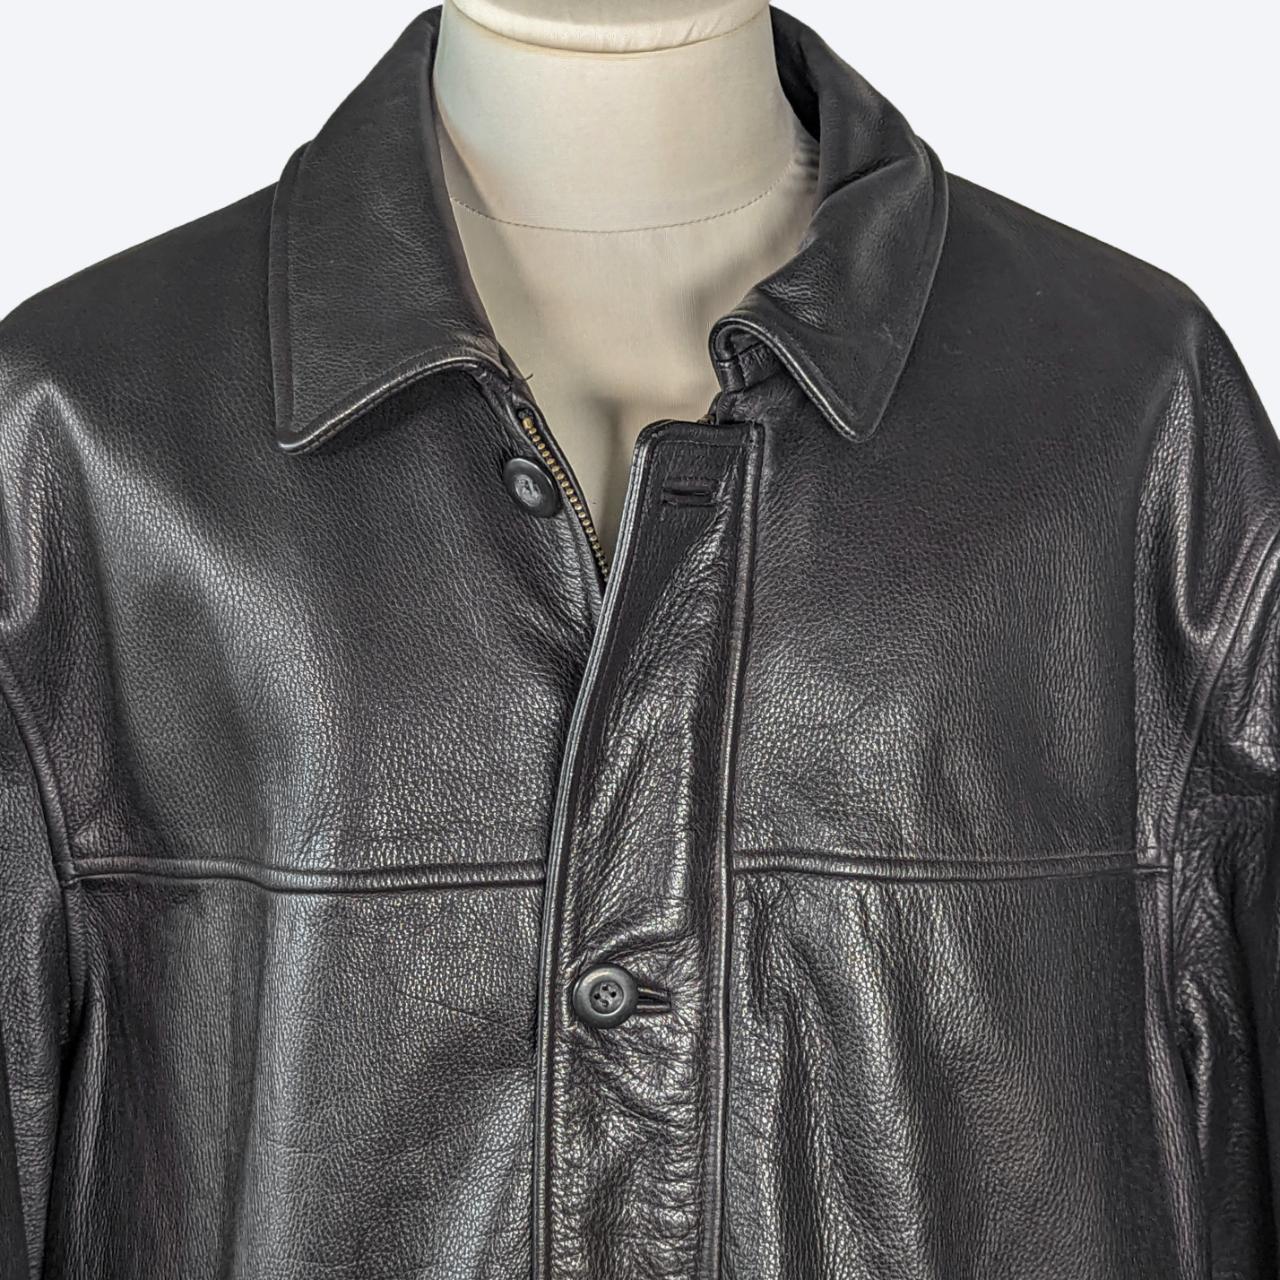 Men's Vintage 90s Urban Wear Leather Jacket with... - Depop